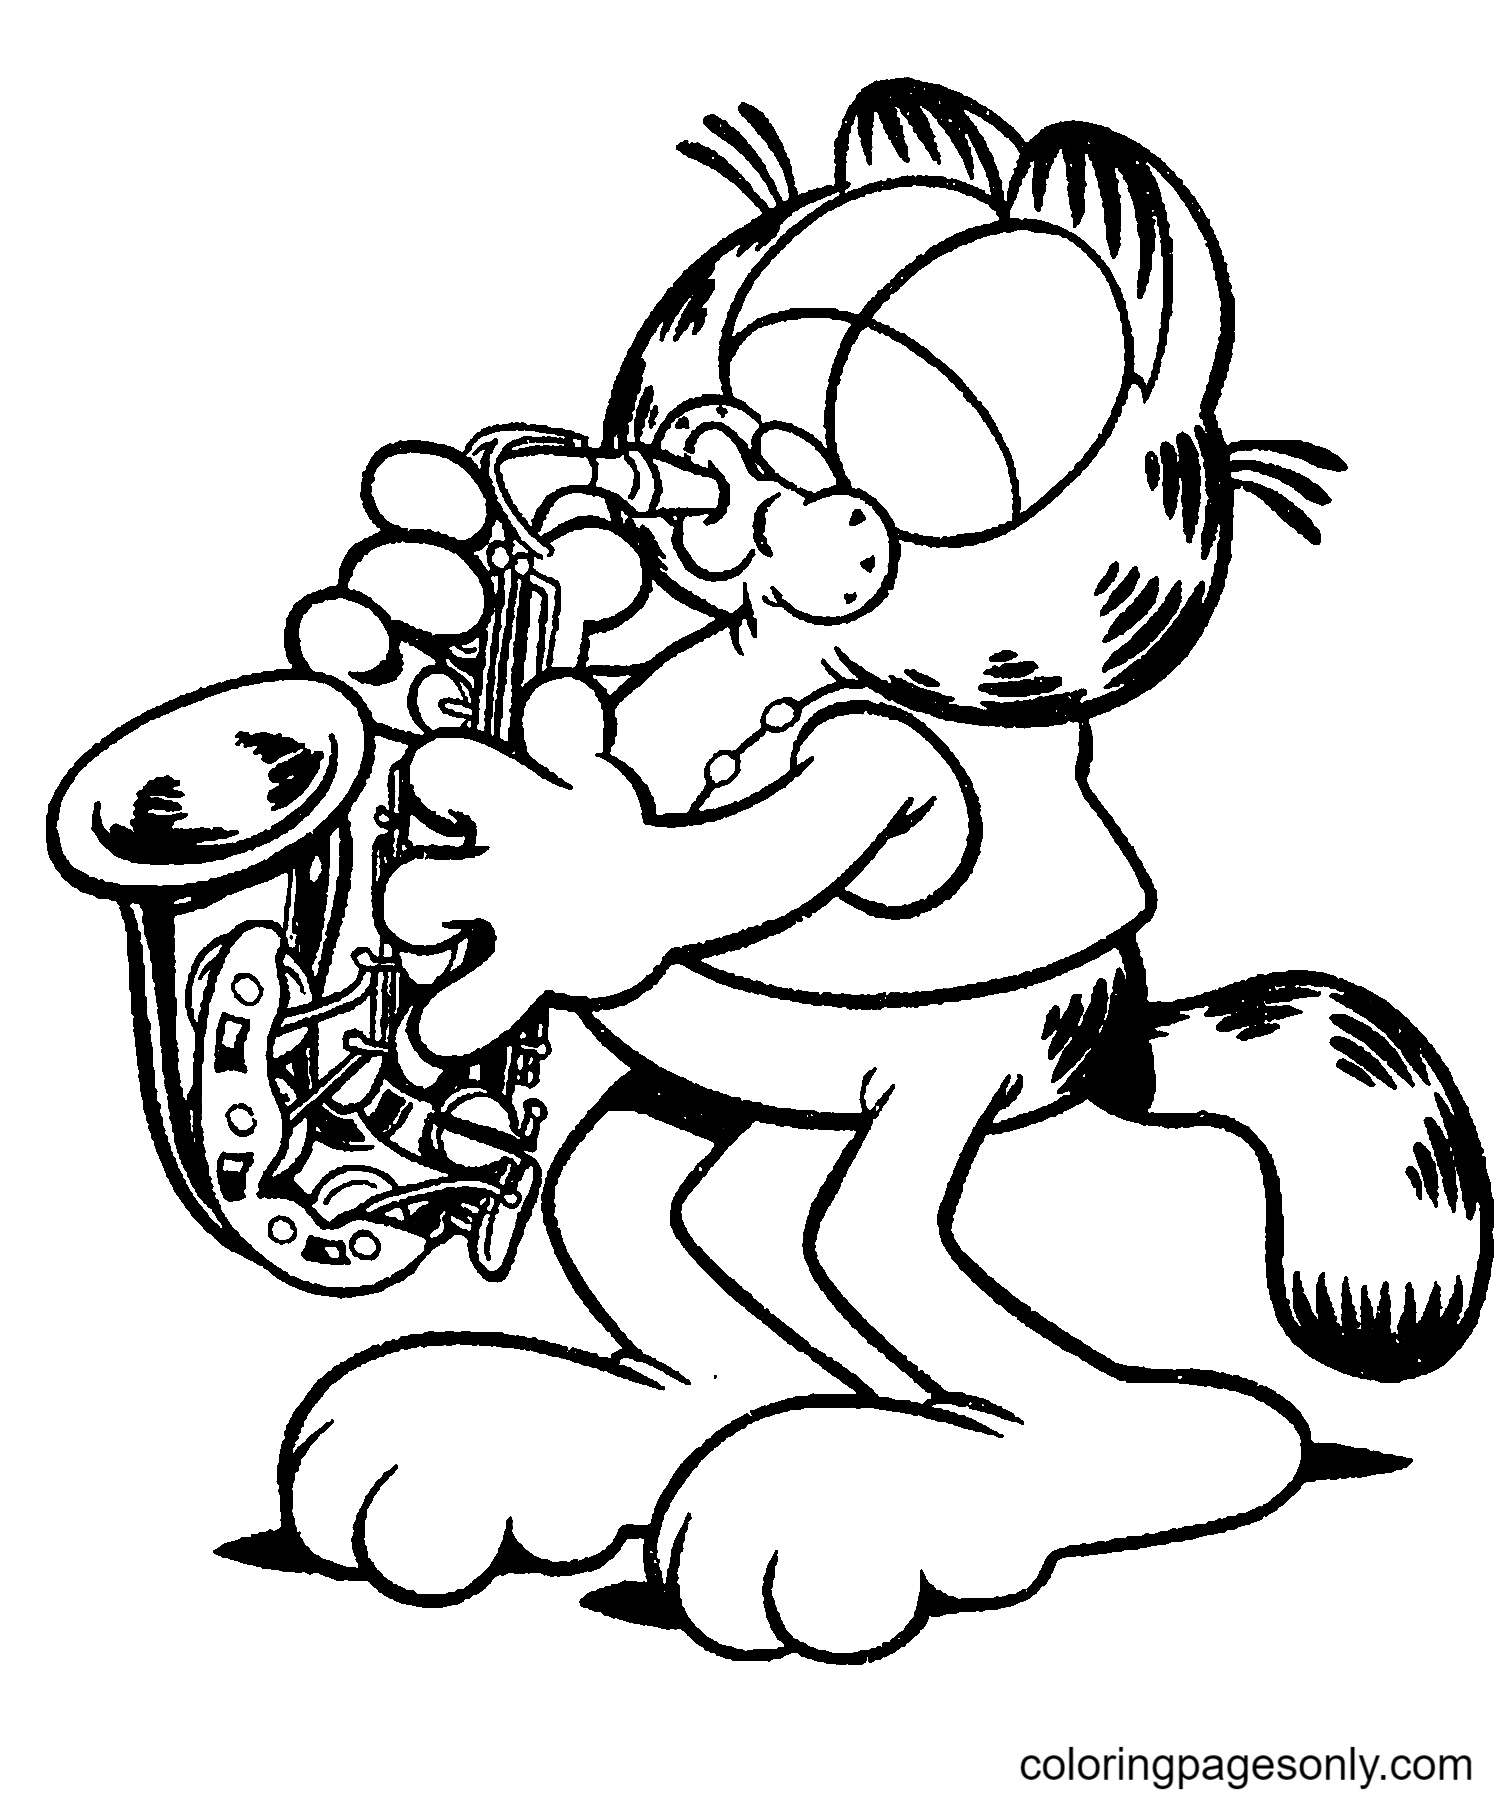 Garfield souffle du saxophone de Garfield